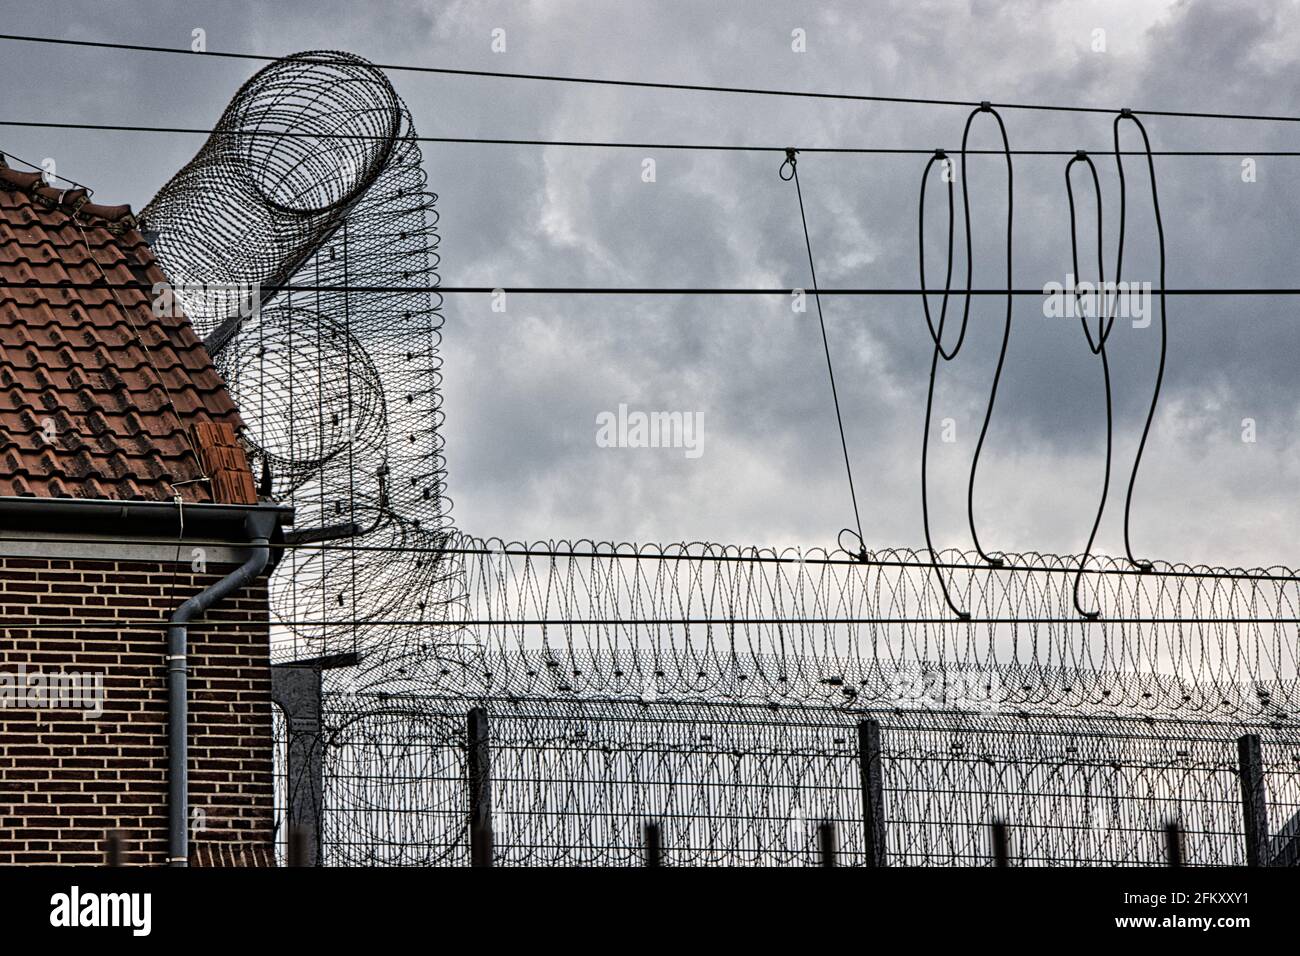 Gefängnis/Jailhouse Banque D'Images